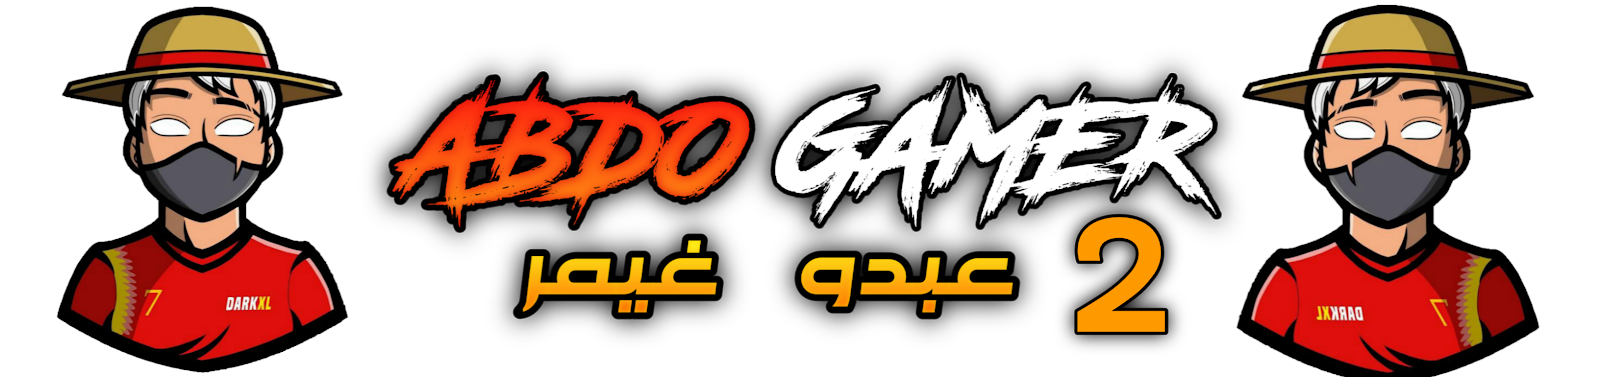 Abdo gamer 2